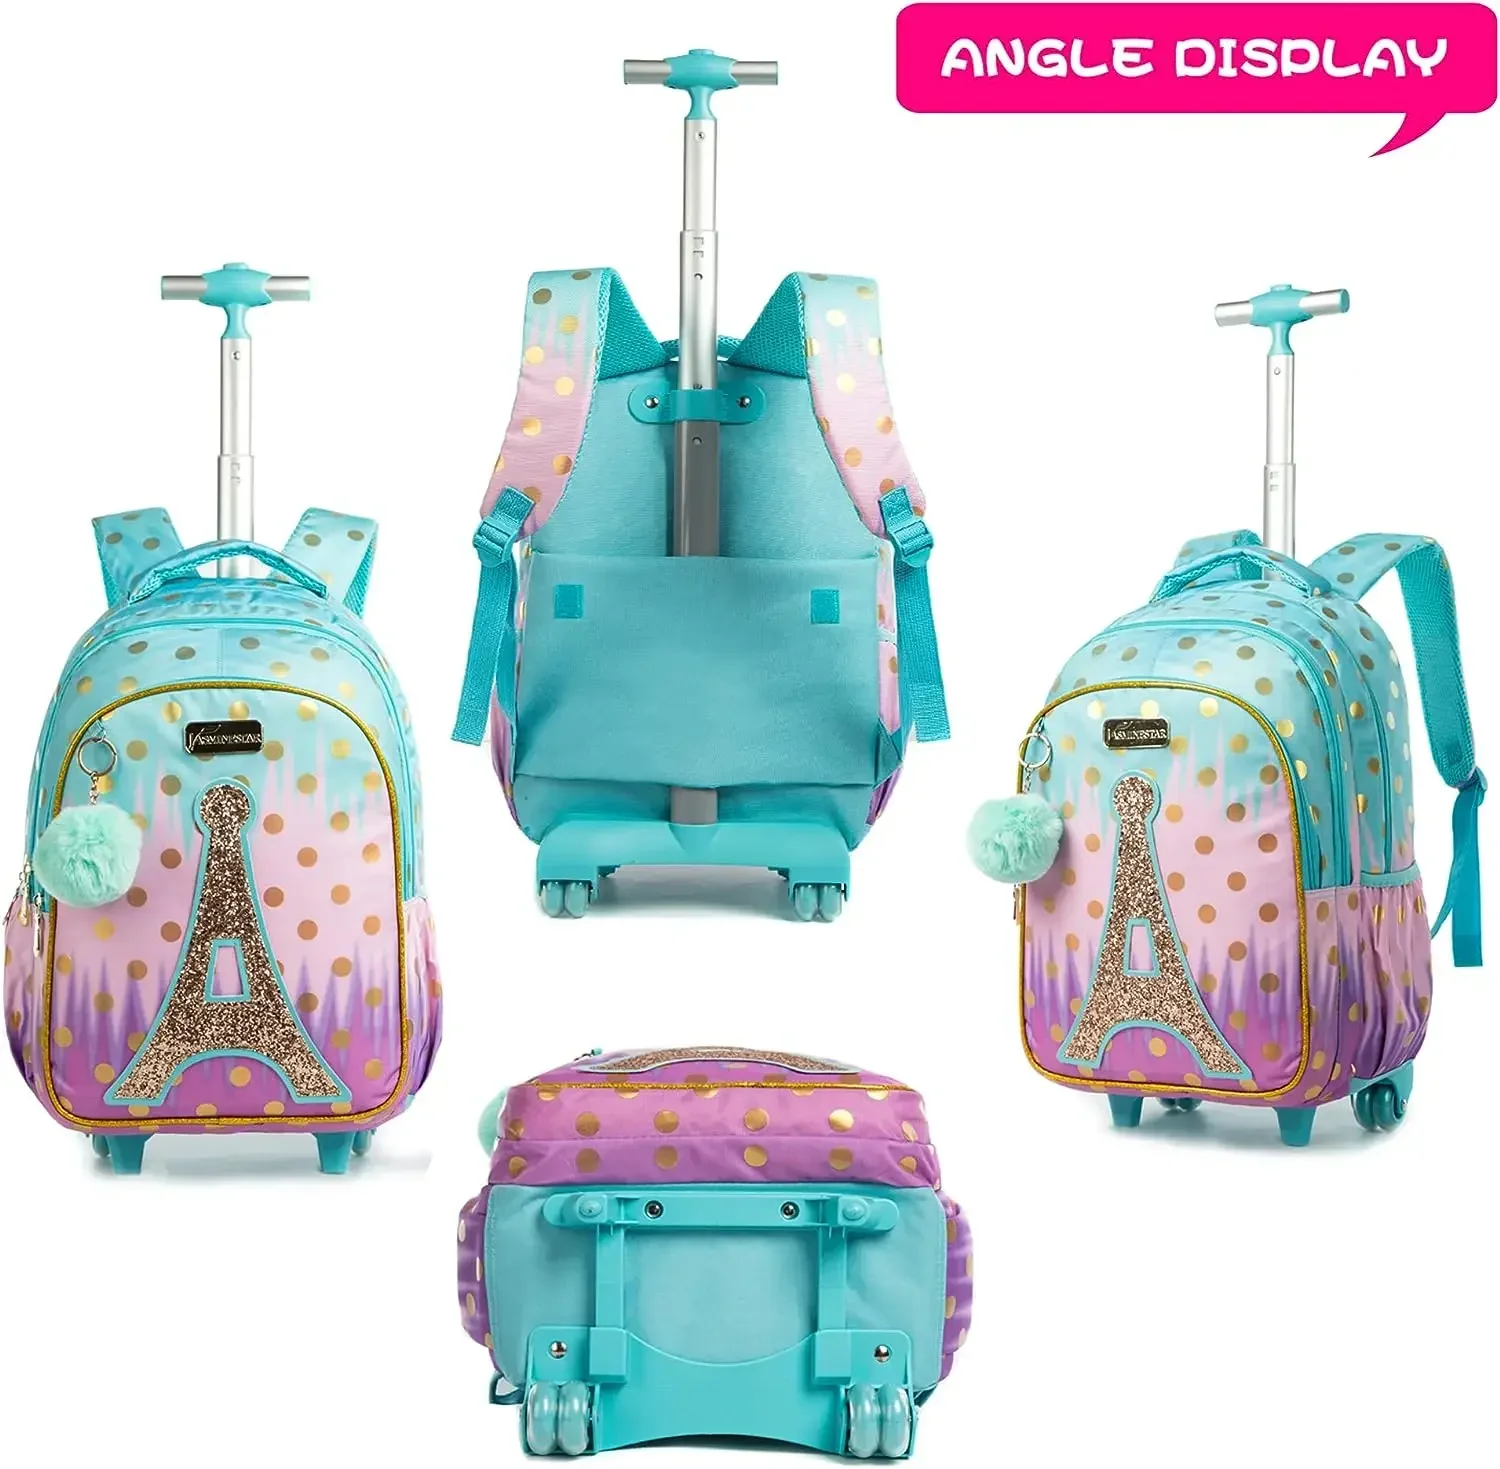 Children's School Backpack with Wheels Kids Wheeled School Bag Teenagers Bag Girls Canvas Backpack Travel Luggage Trolley Bags